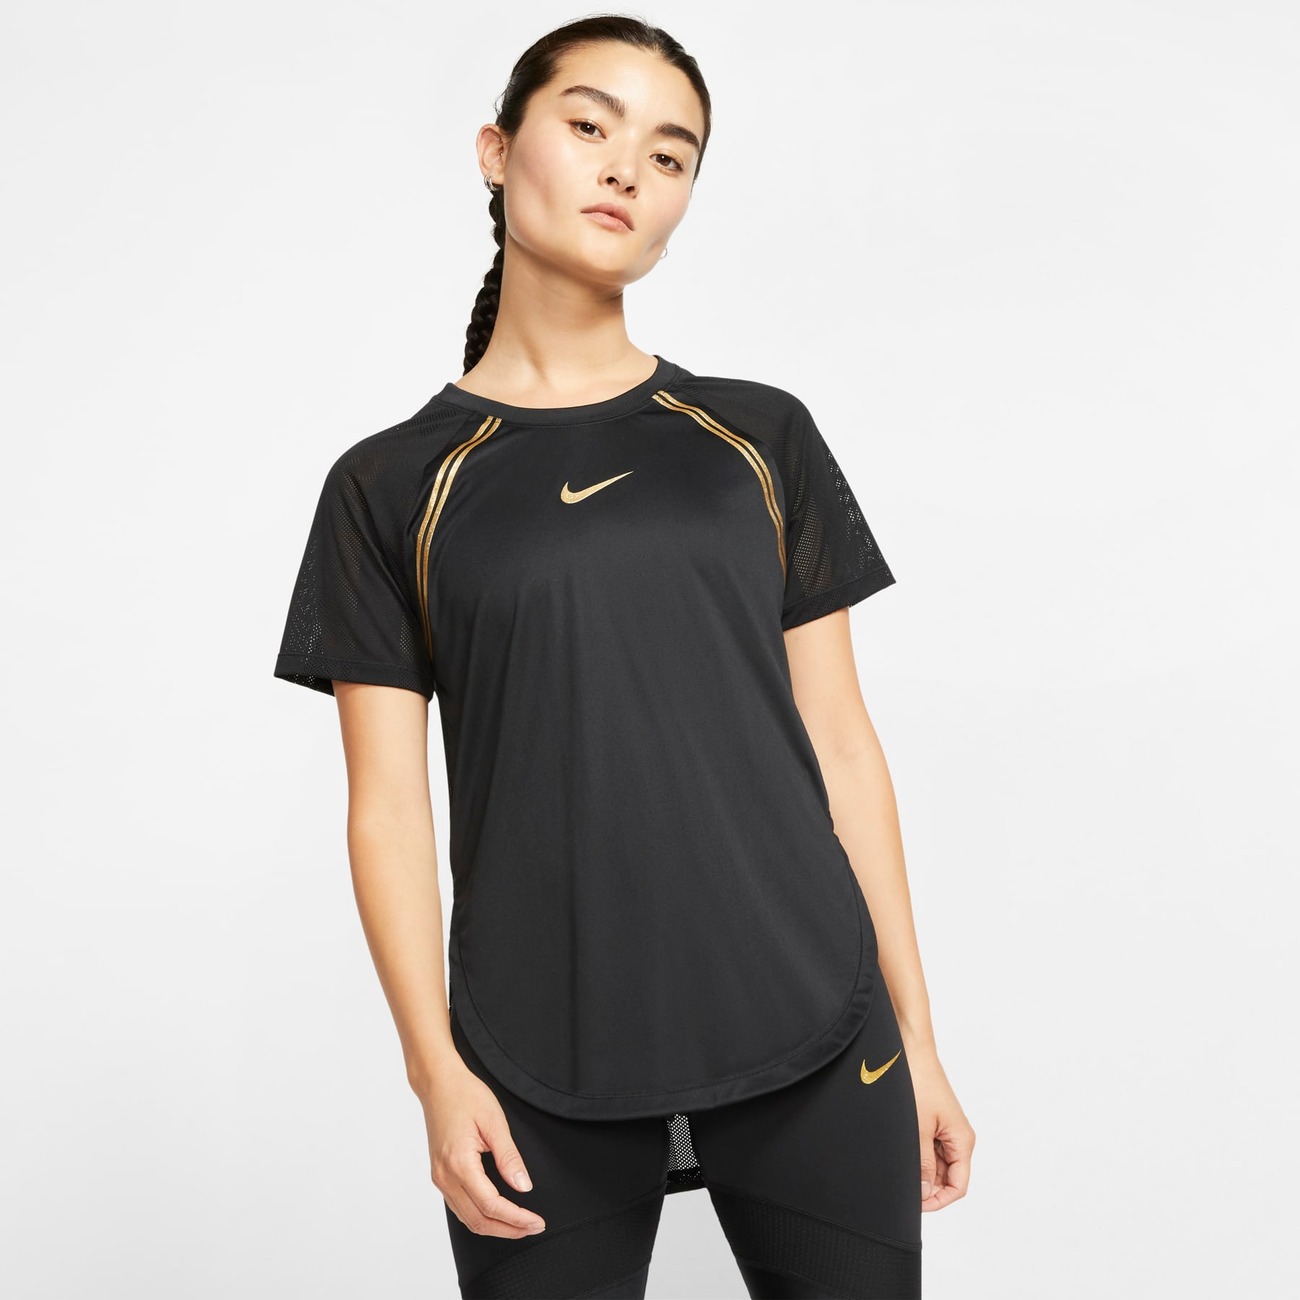 Camiseta Nike Feminina - Foto 1